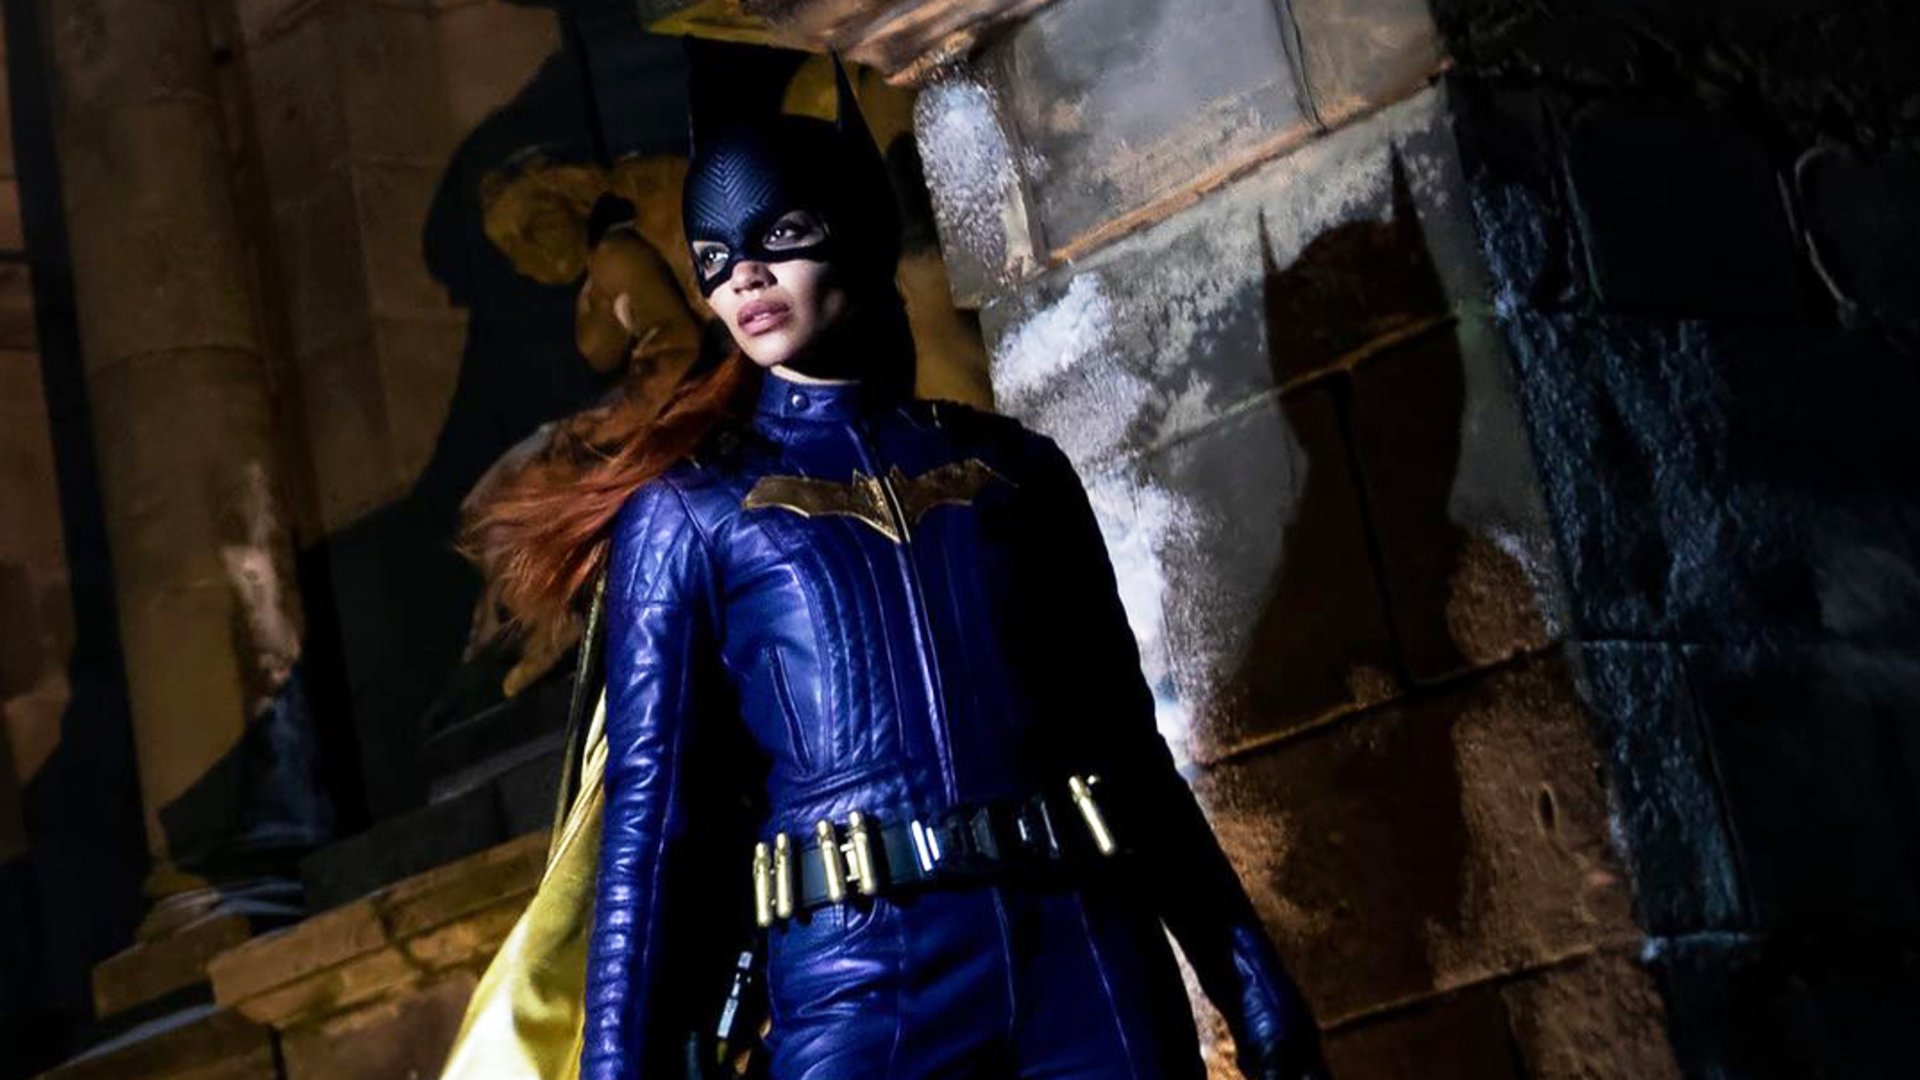 #DC-Schock: Warner entzieht den Regisseuren Zugriff auf eigene „Batgirl“-Aufnahmen